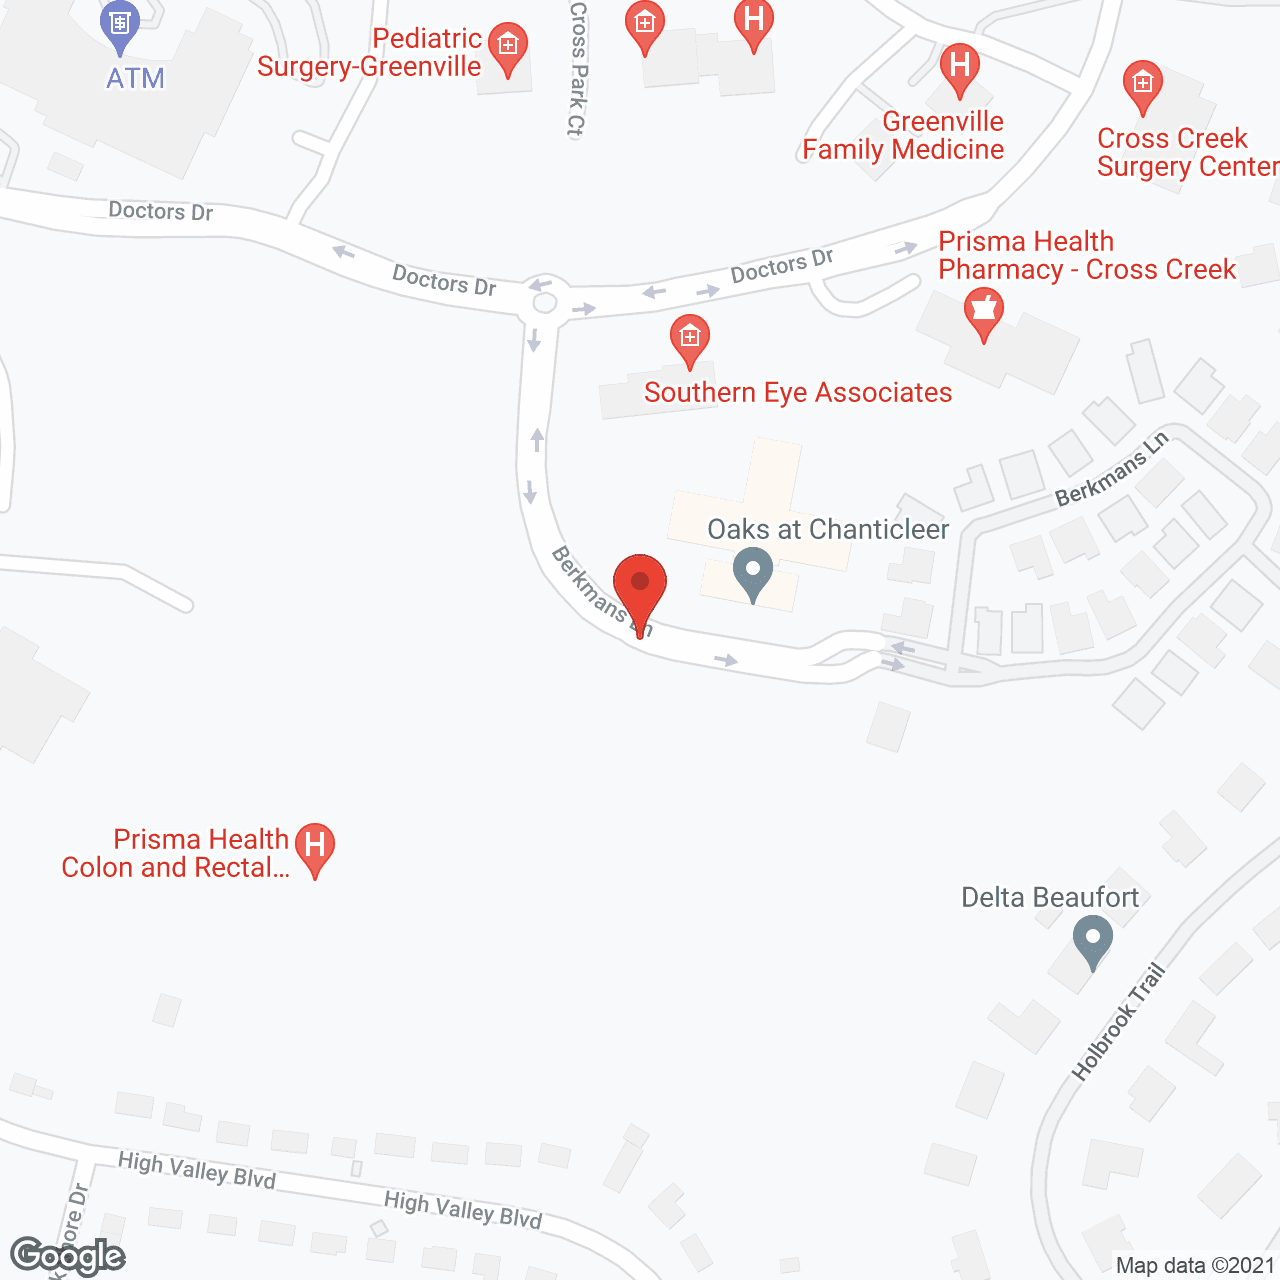 Oaks at Chanticleer in google map